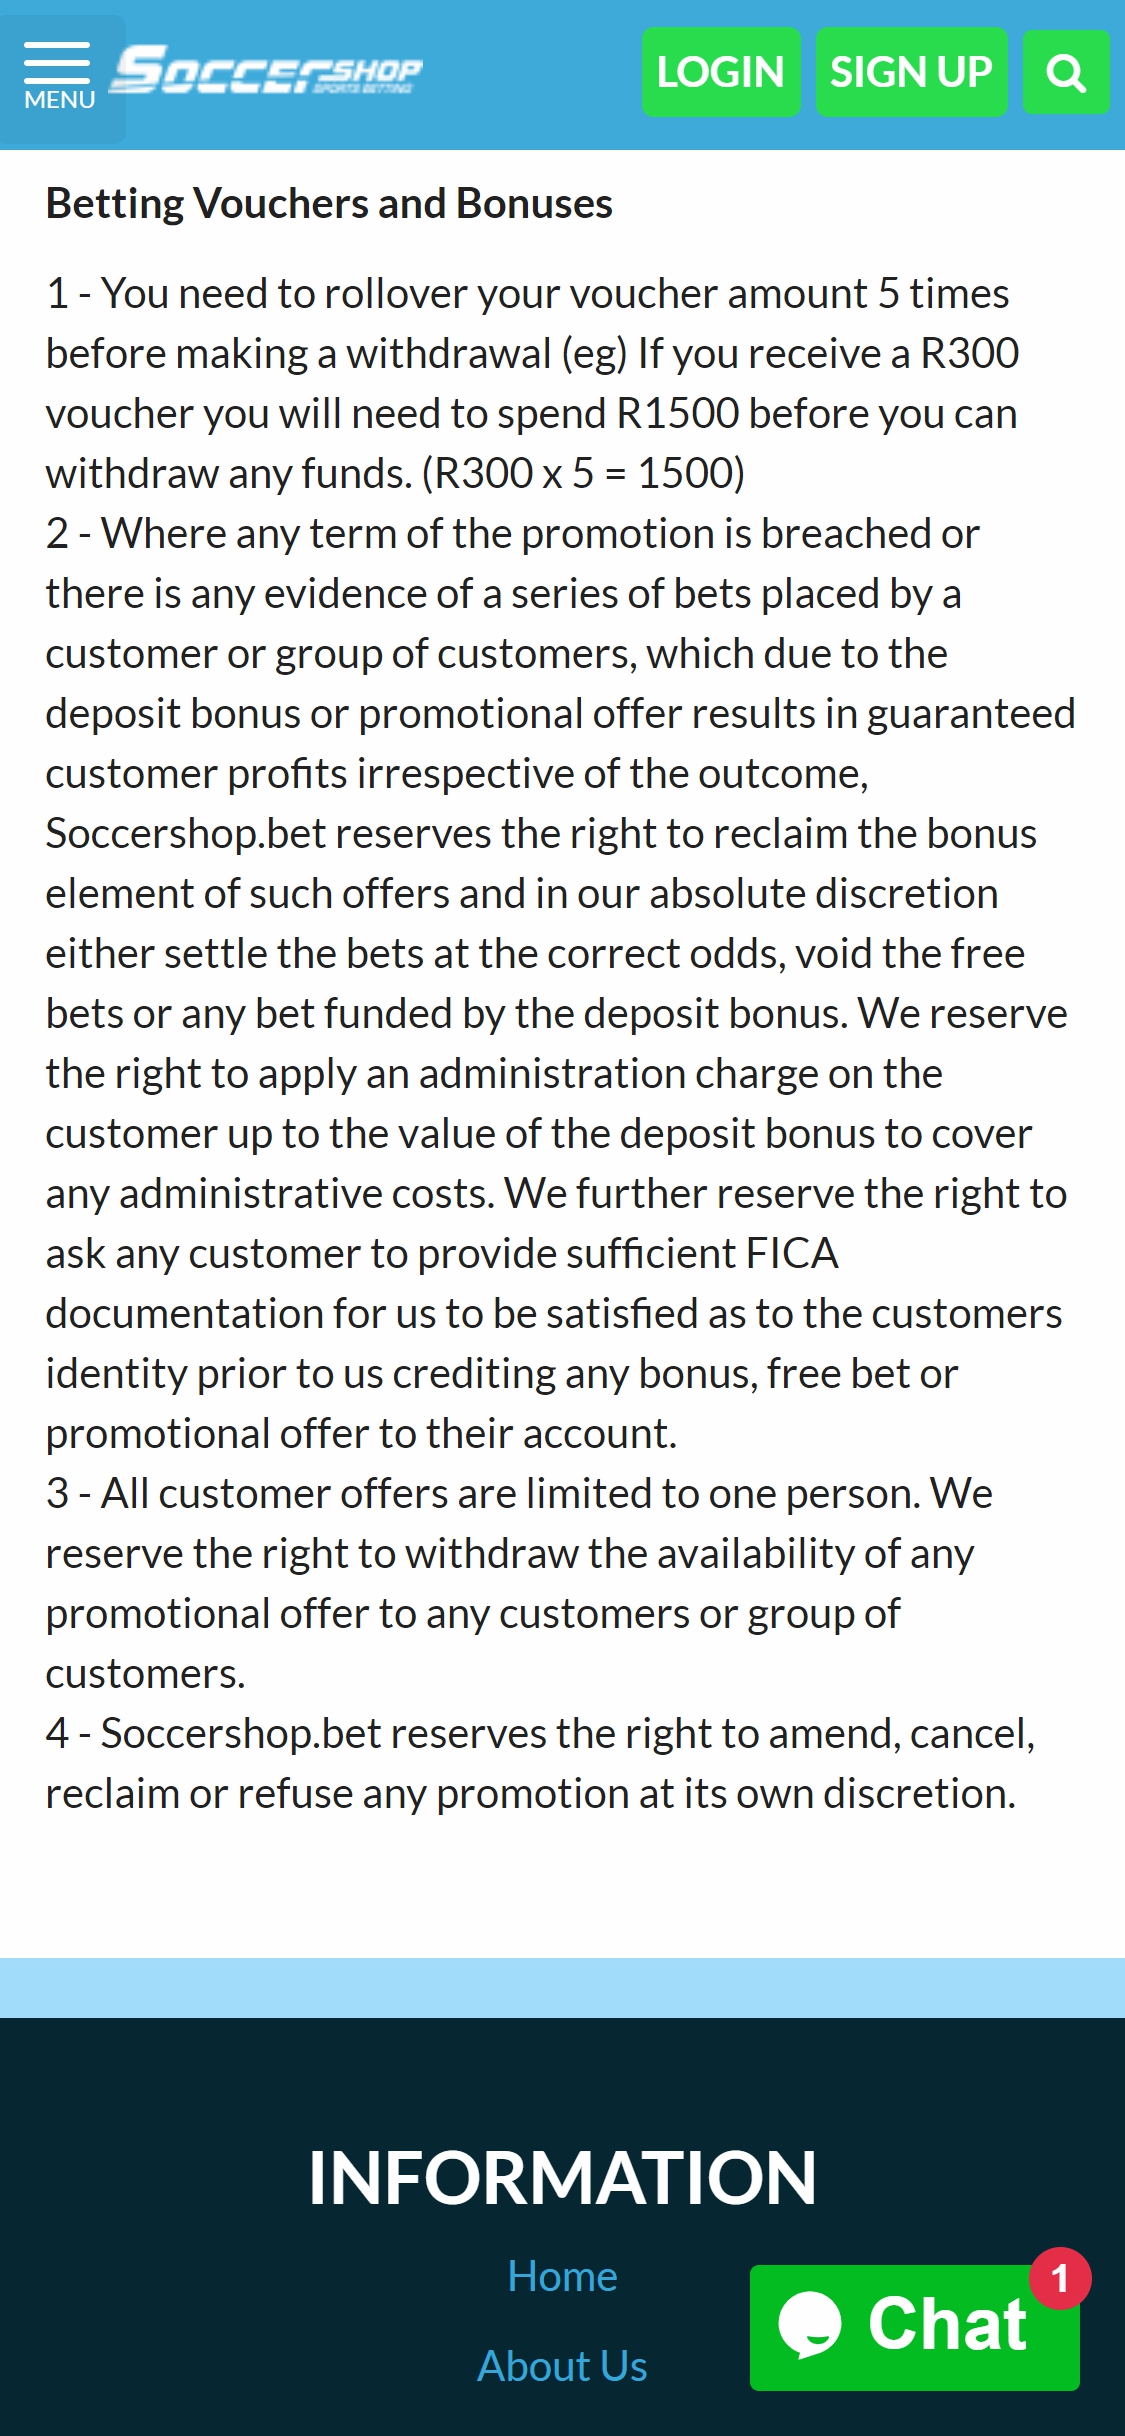 LM Bookmaker Casino Mobile No Deposit Bonus Review